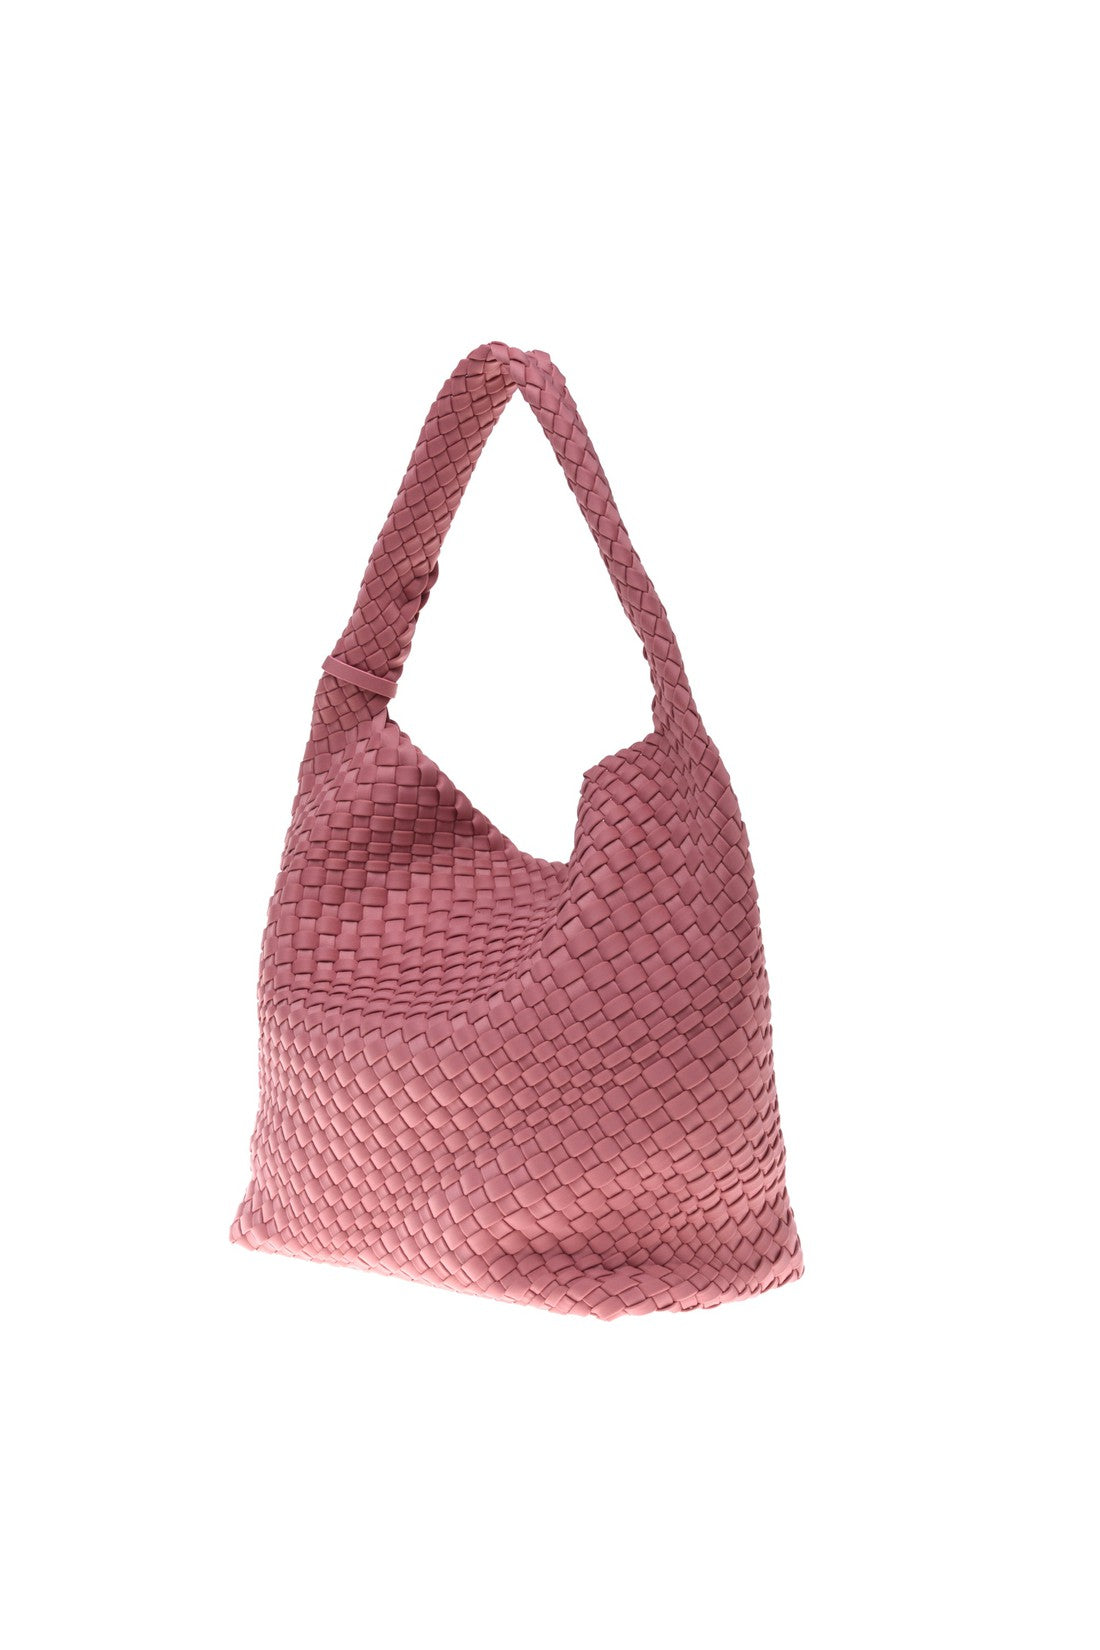 BALDININI-OUTLET-SALE-Shoulder-bag-in-lilac-nylon-Taschen-Schultertaschen-ARCHIVE-COLLECTION-3.jpg